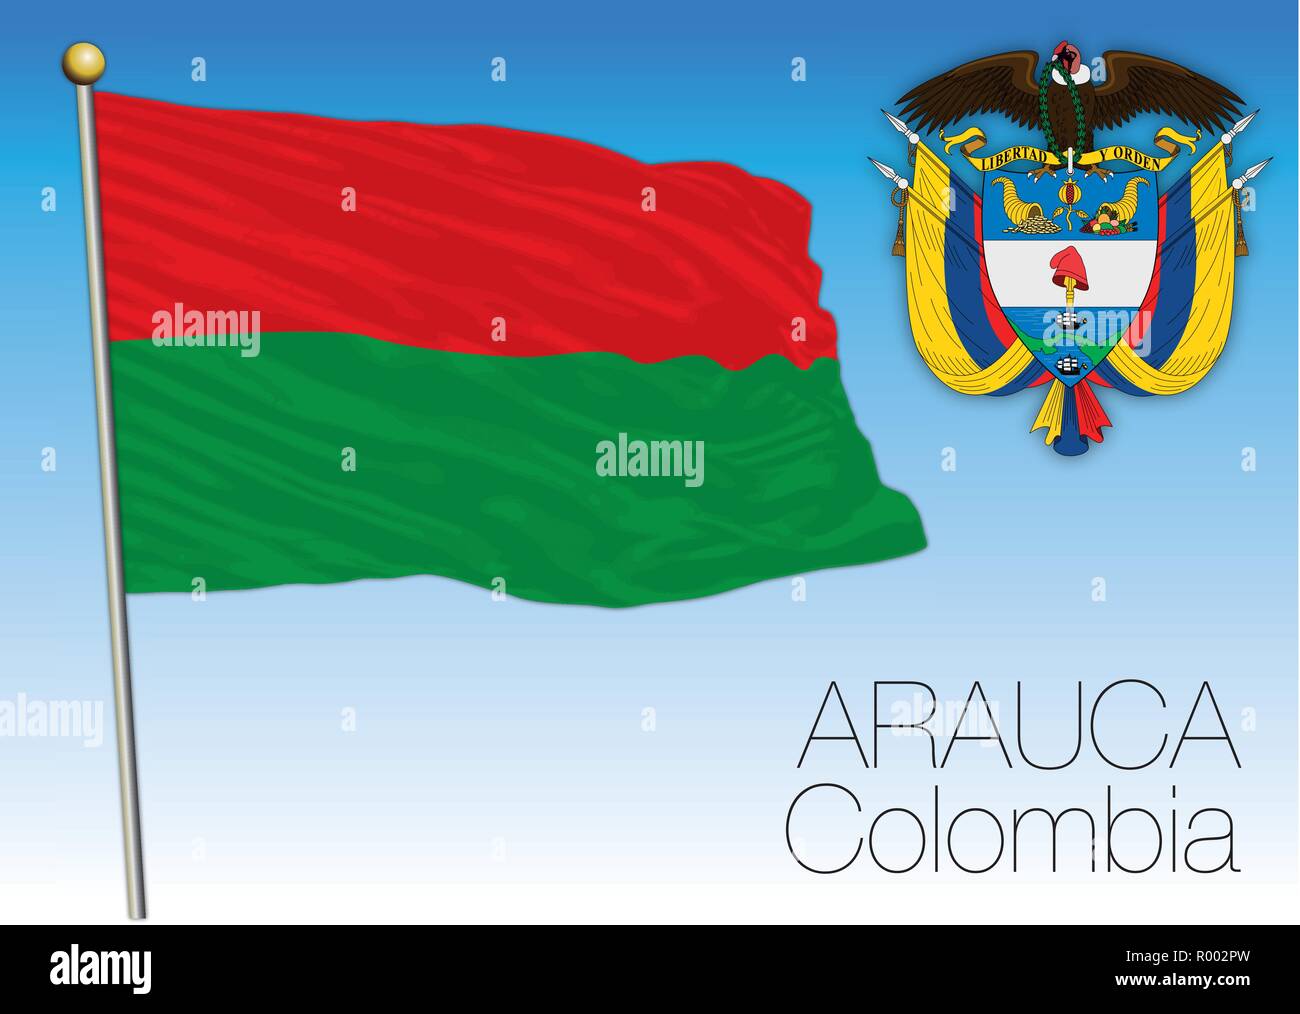 Arauca regional flag, Republica de Colombia, vector illustration Stock Vector